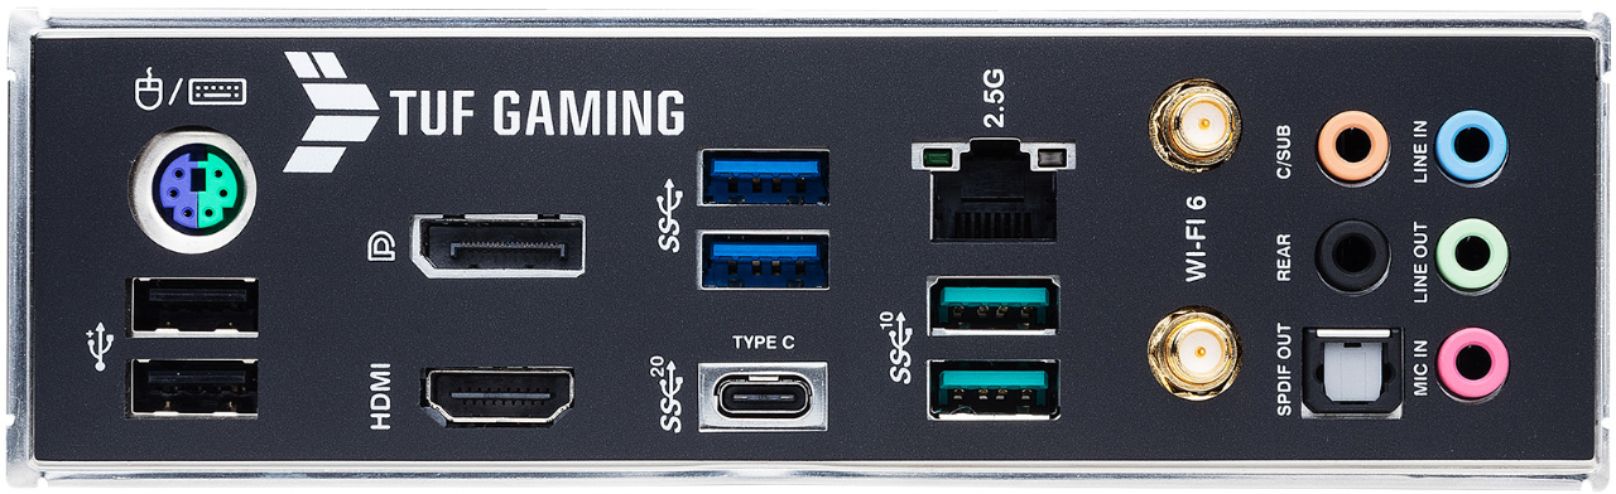 ASUS - TUF GAMING Z590-PLUS WIFI Socket LGA 1200 USB 3.2 Intel Motherboard